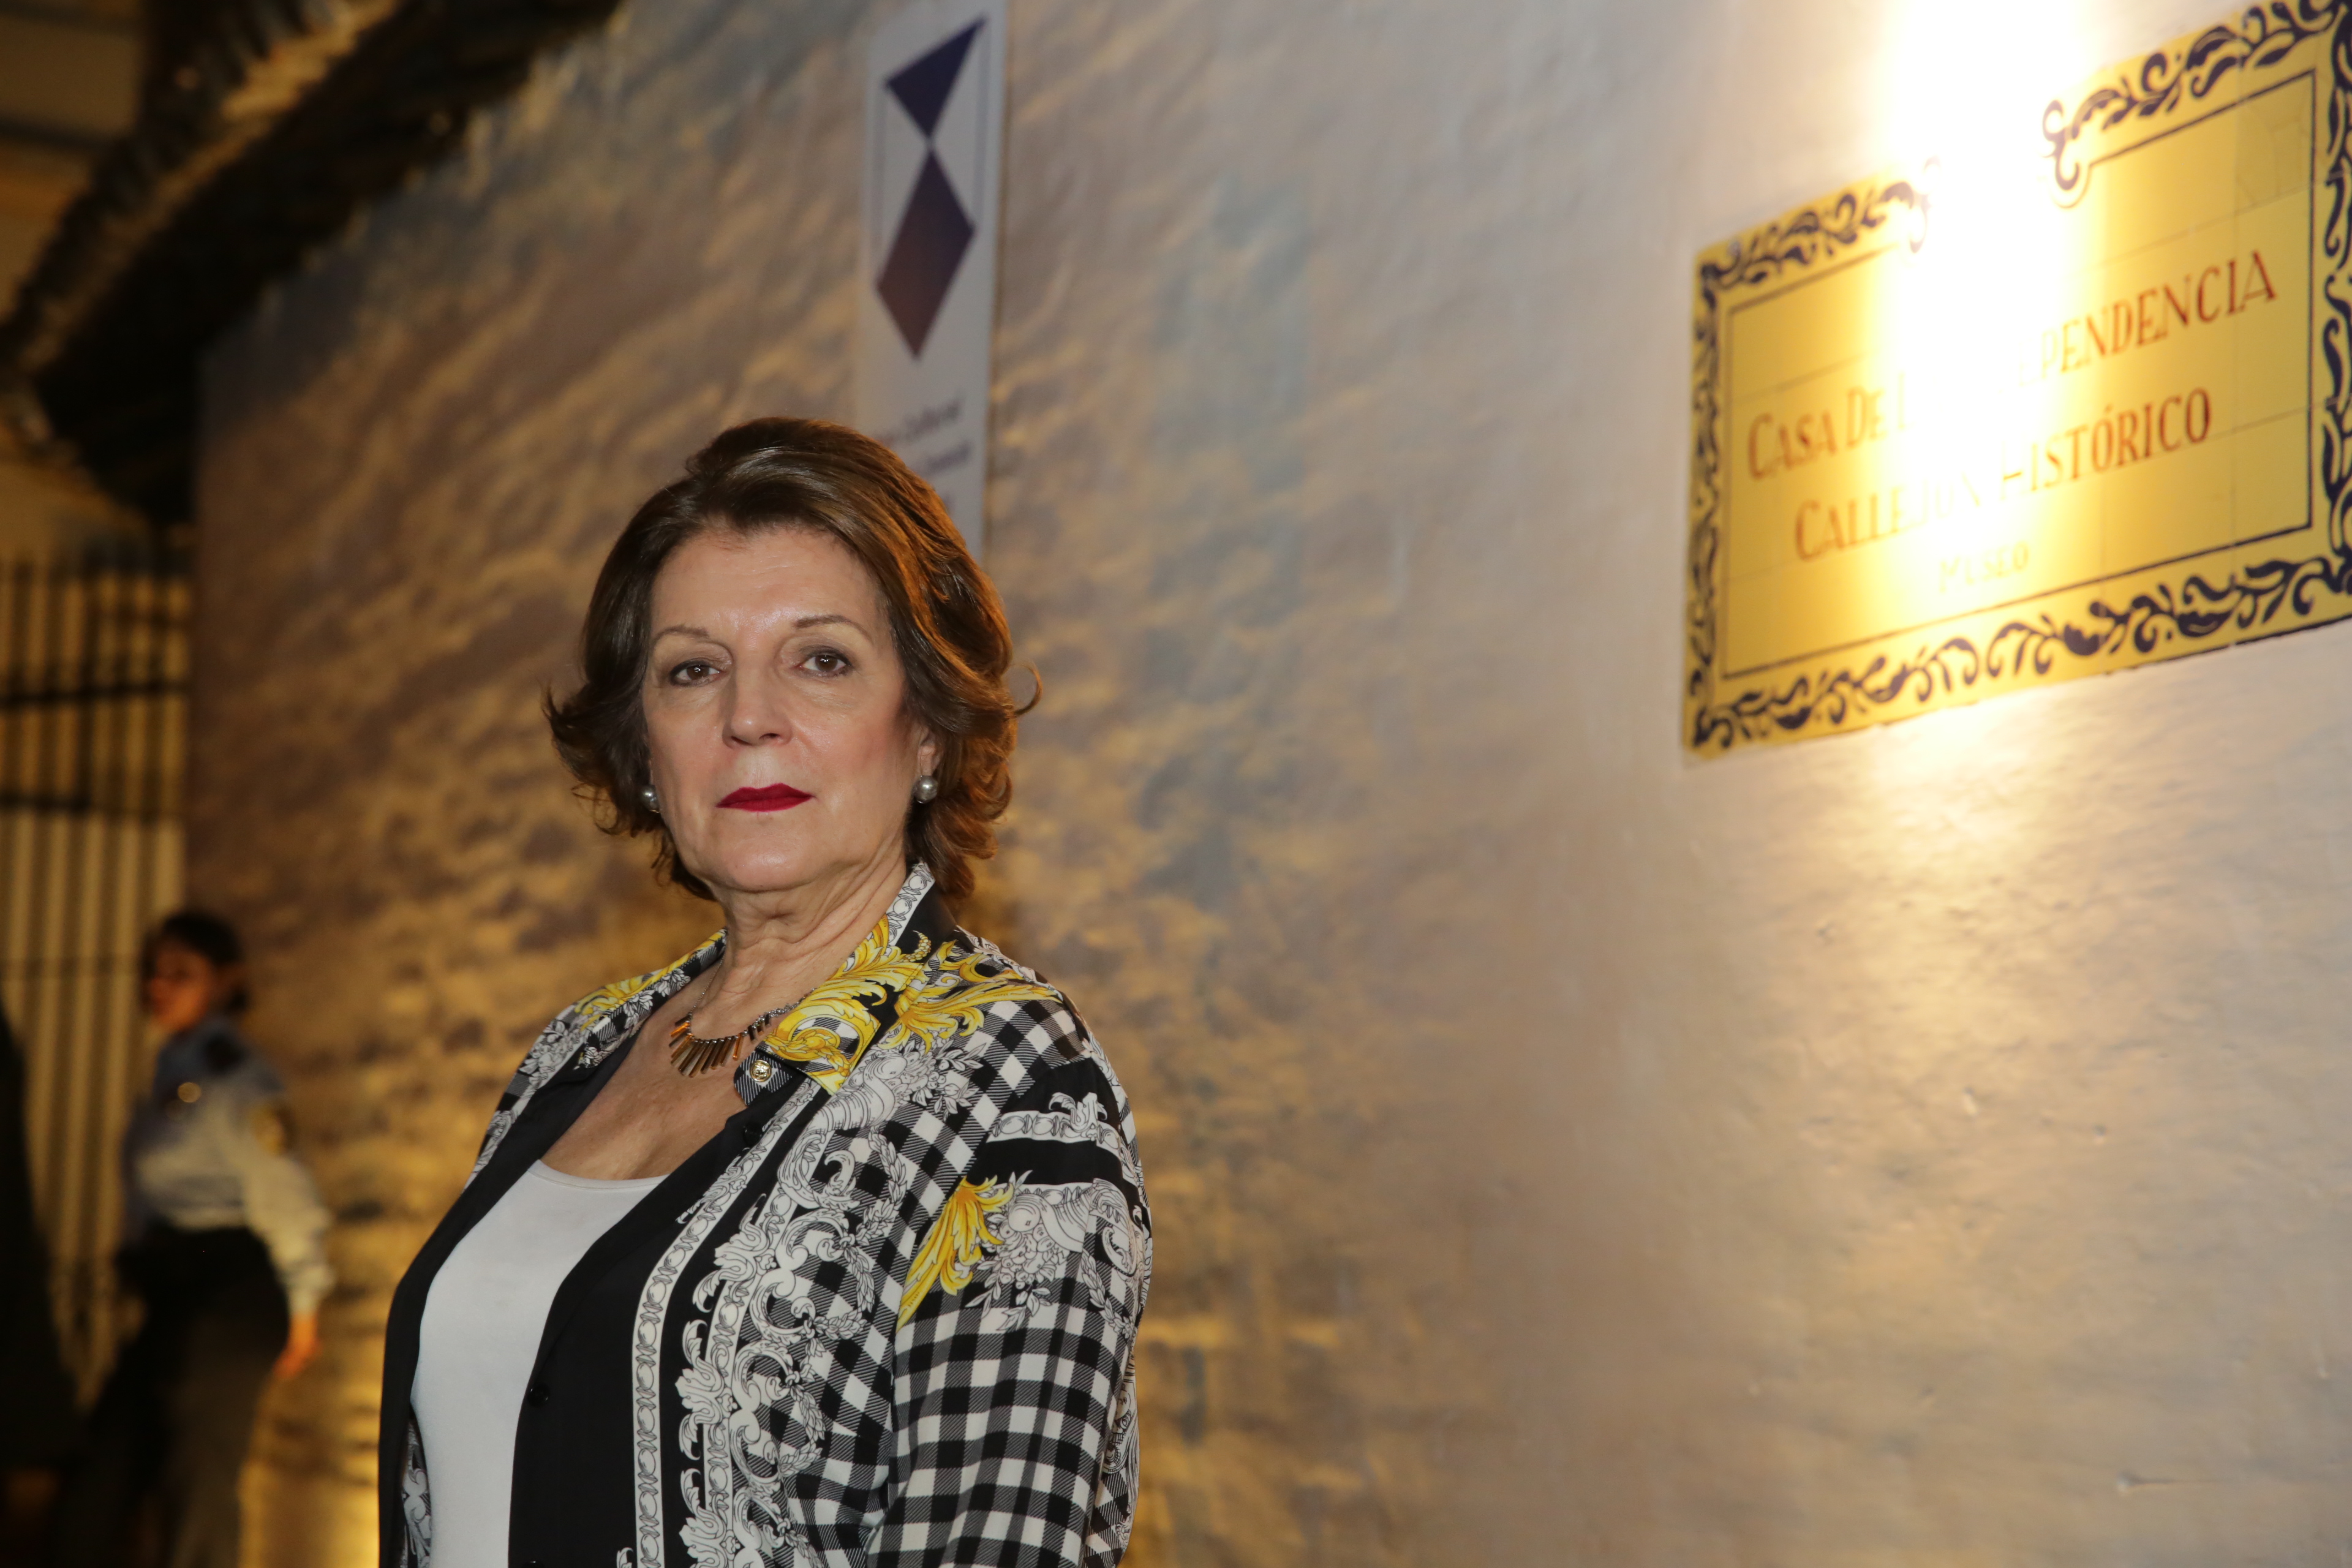 Galardonan a la ministra Mabel Causarano con el Premio Ragusani nel mondo imagen